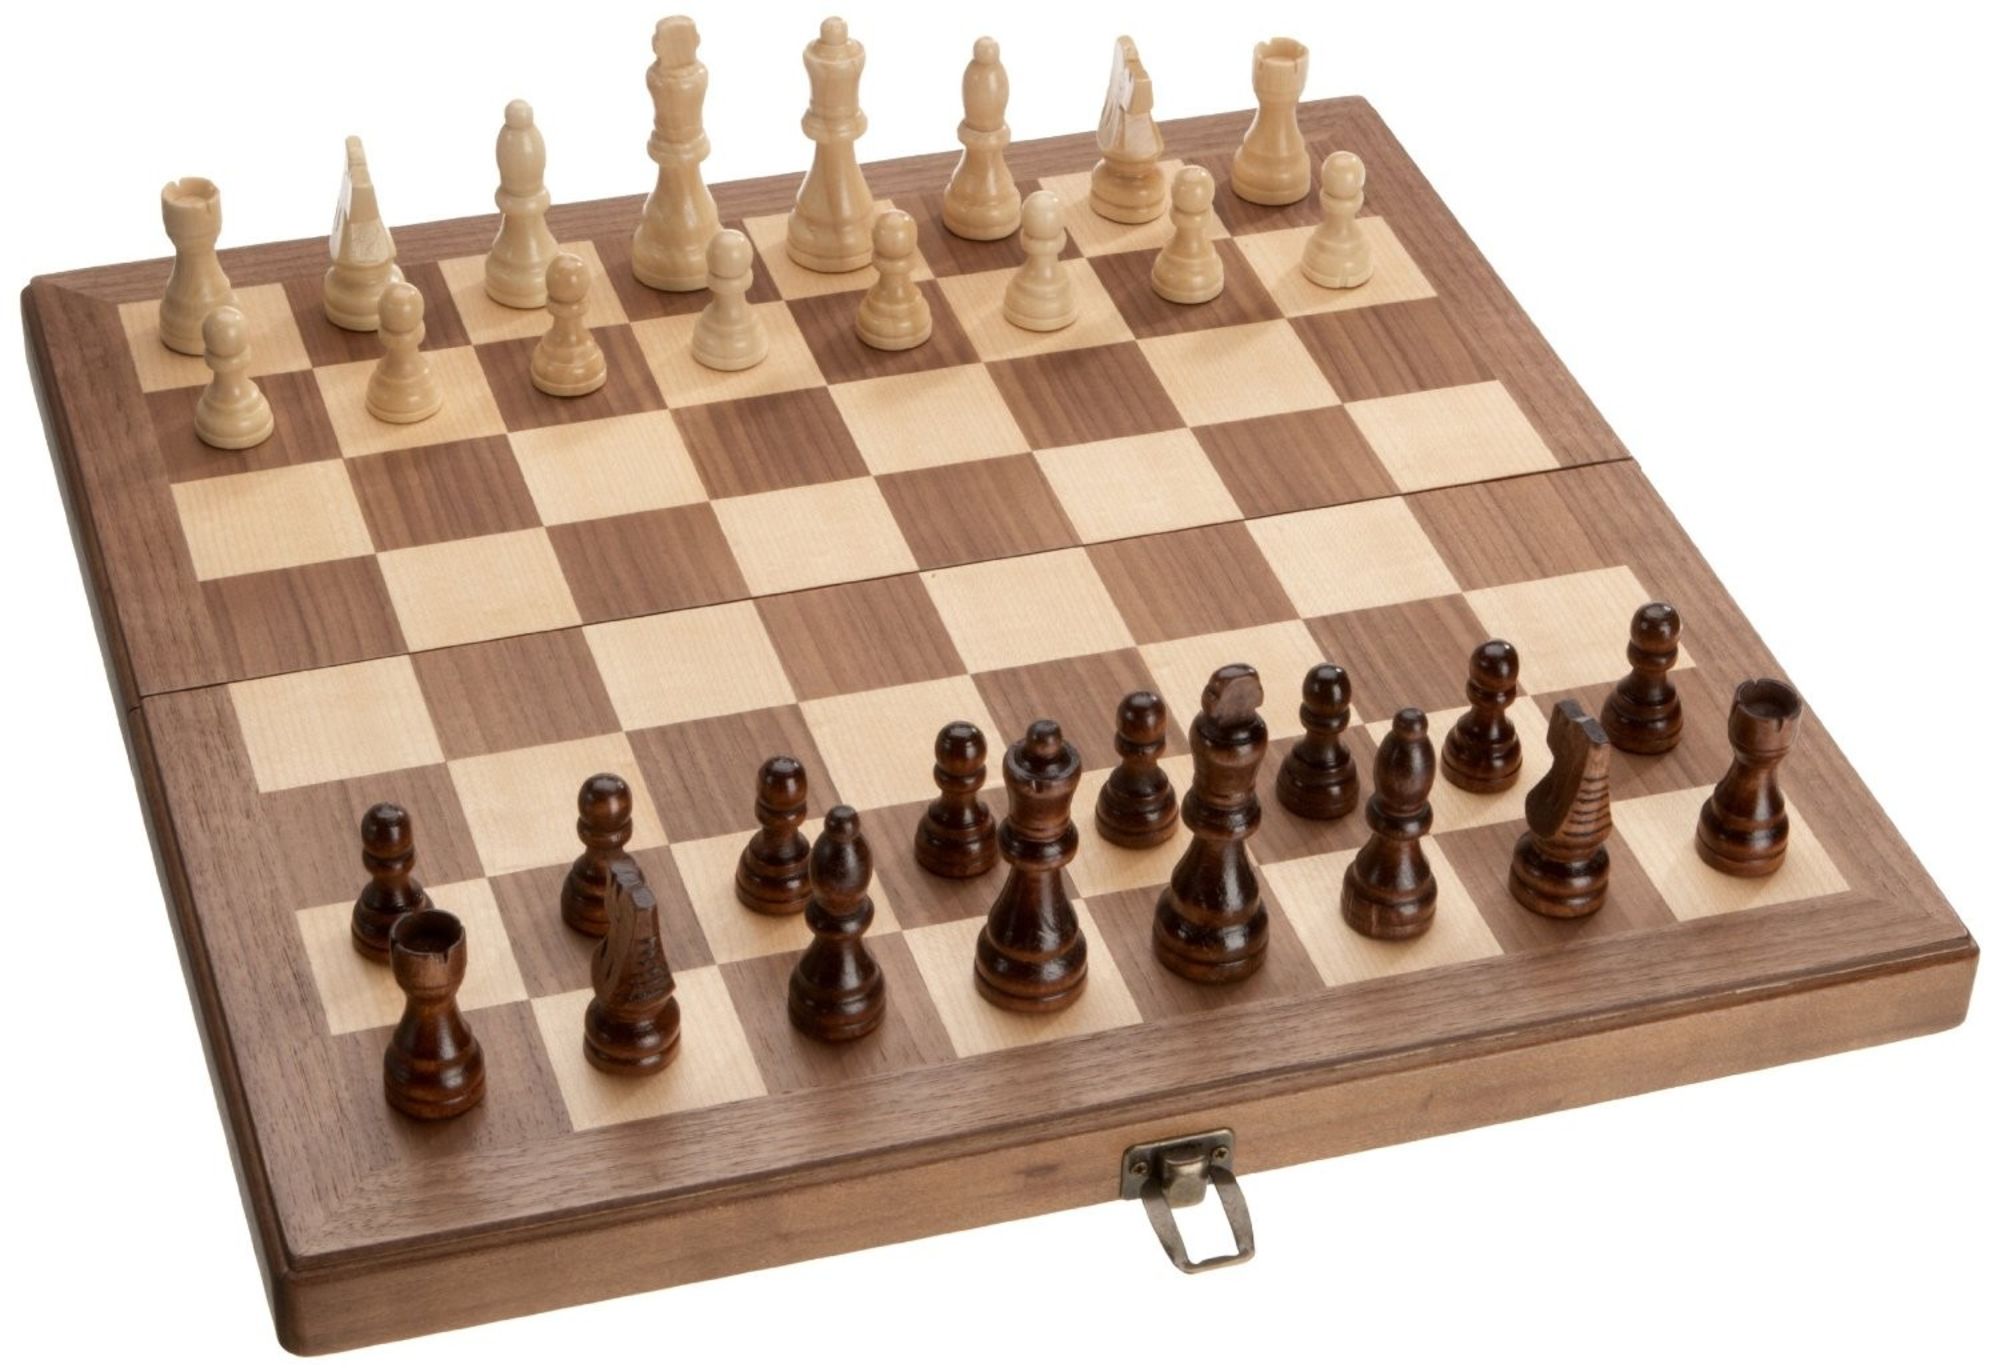 Philos Schach Chess Folding 26cm (CHS026216)